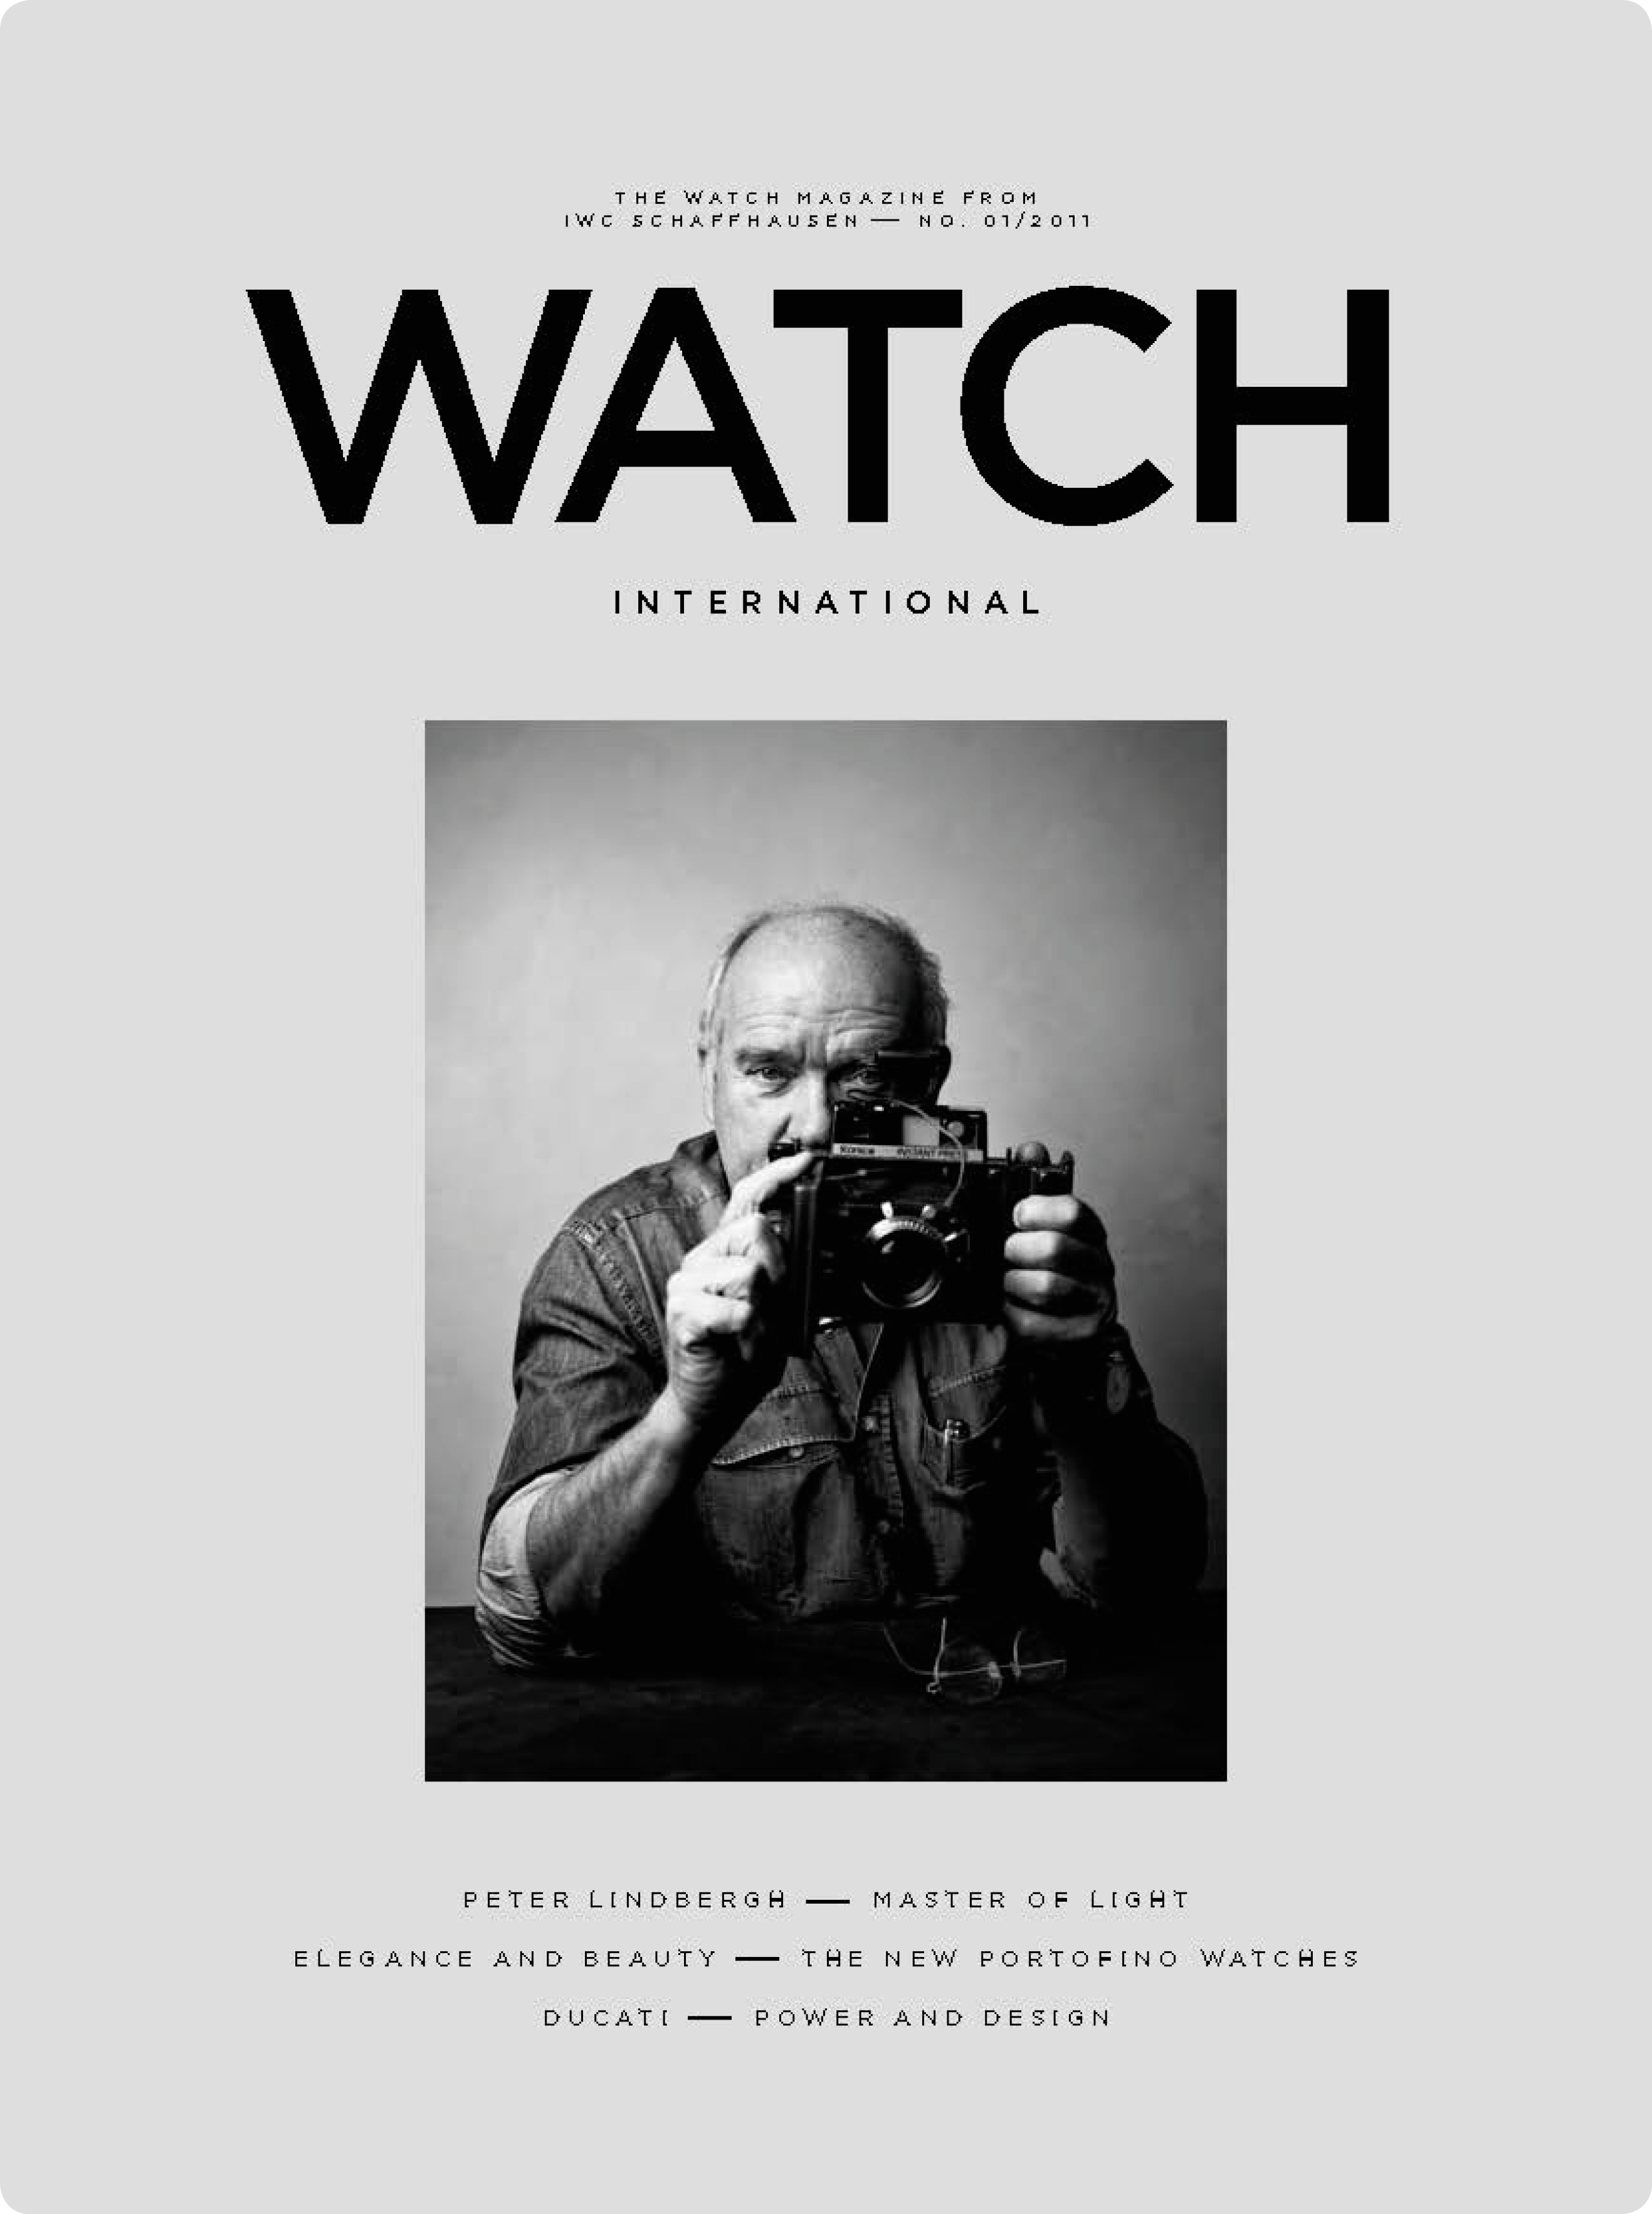 ringzwei IWC Watch International – Peter Lindbergh